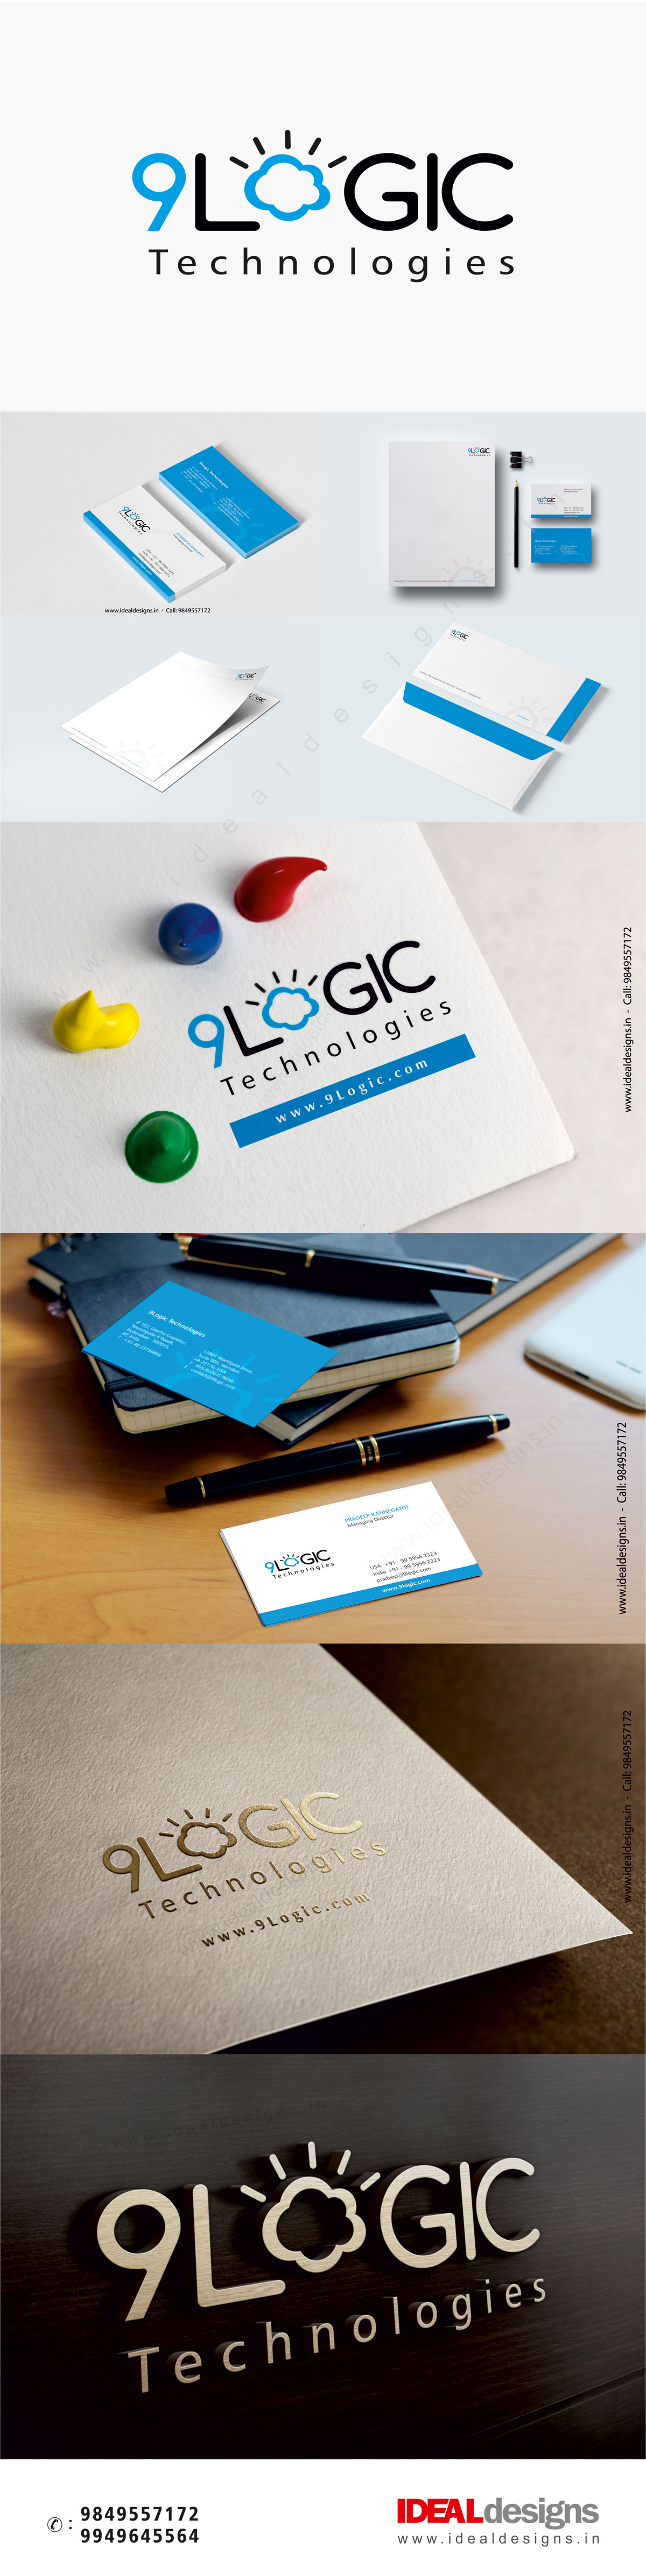 9Logic-Inc-Cloud-Services-Microsoft-Services-Brand-identity-design-india.jpg